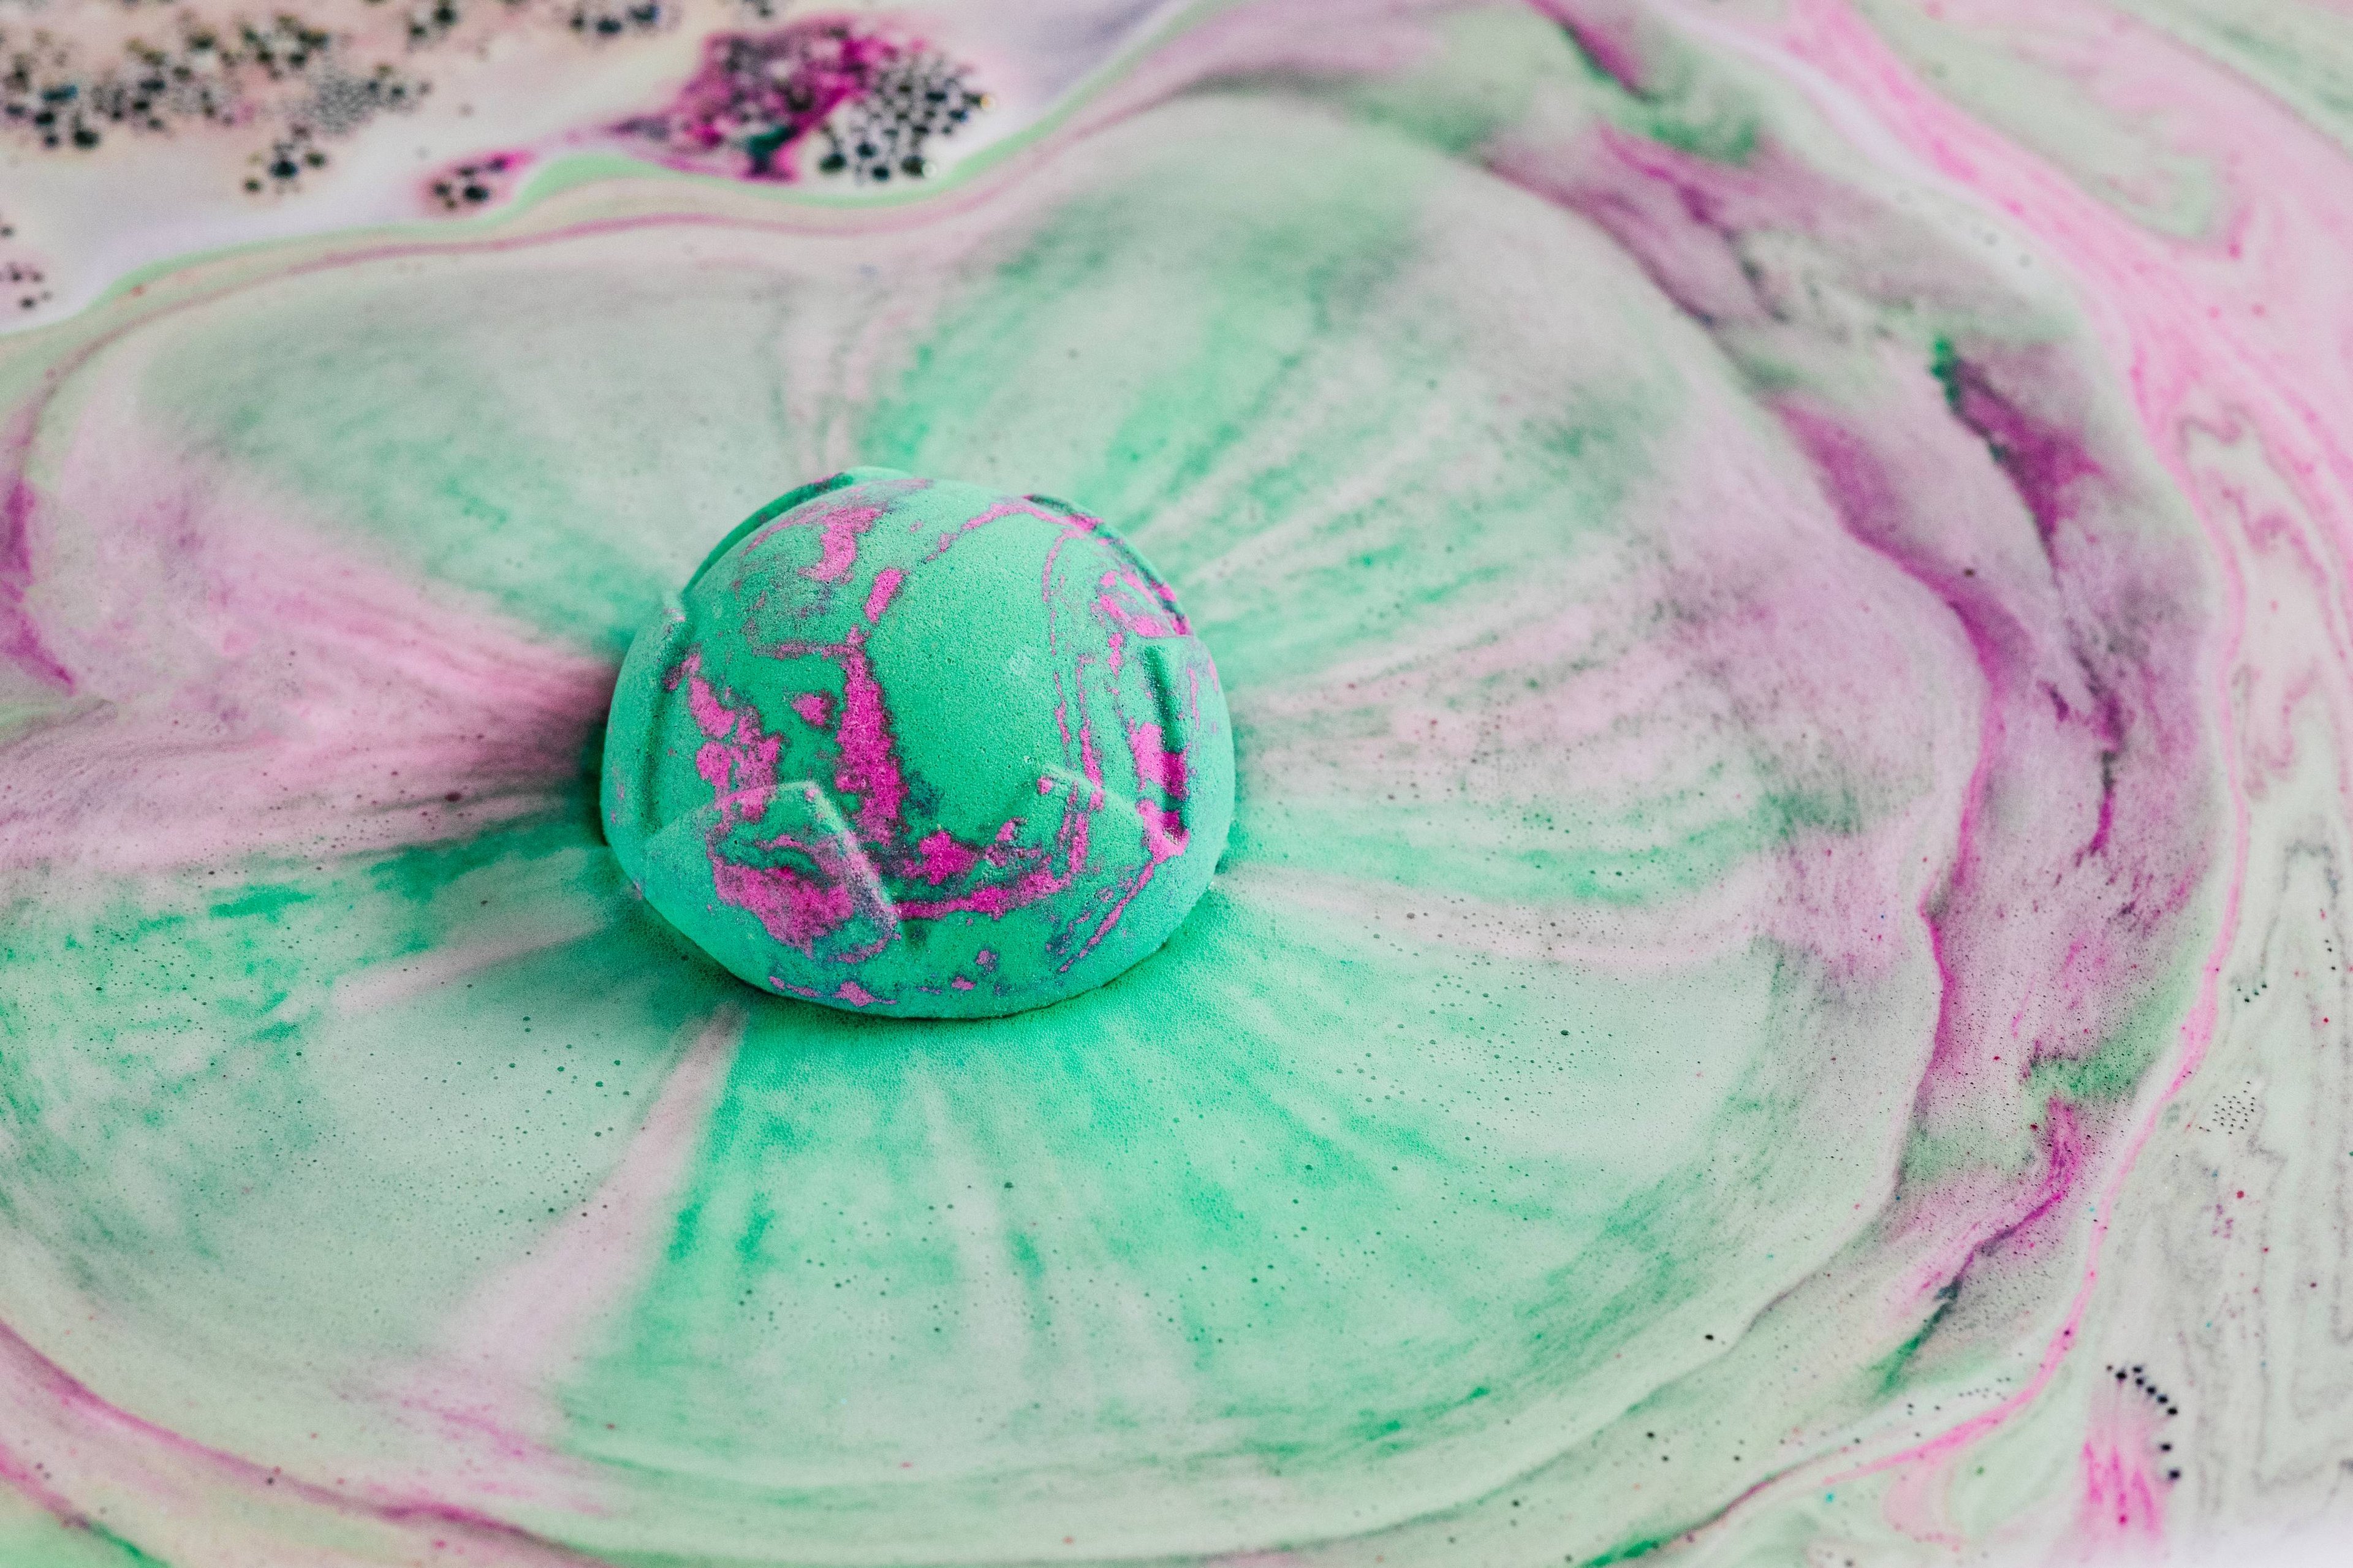 Lord of Misrule bath bomb floats, meting among a foamy sea of enchanting pink and green swirls. 